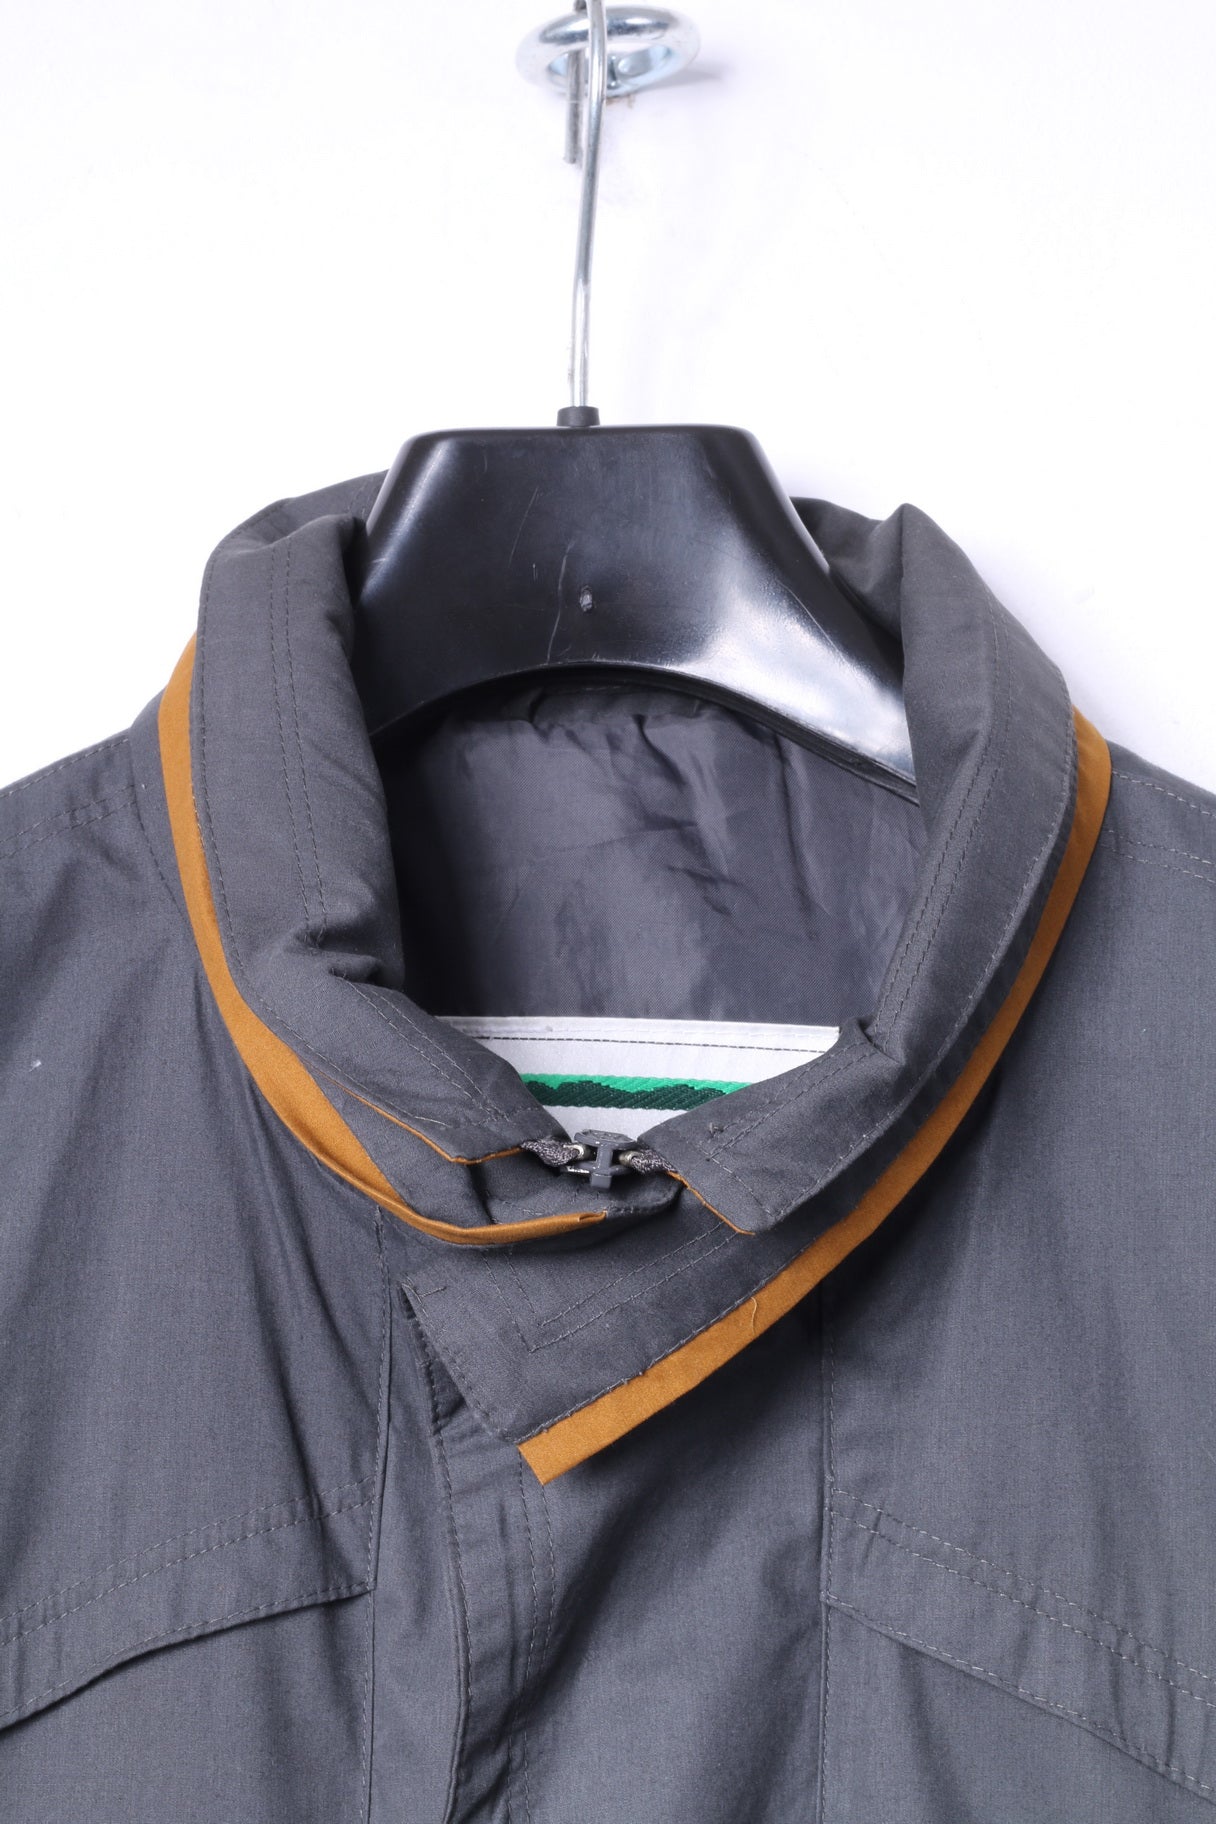 Dannimac Naturally Men 52 L Jacket Gray Cotton Country Lightweight Vintage Zip Up Top